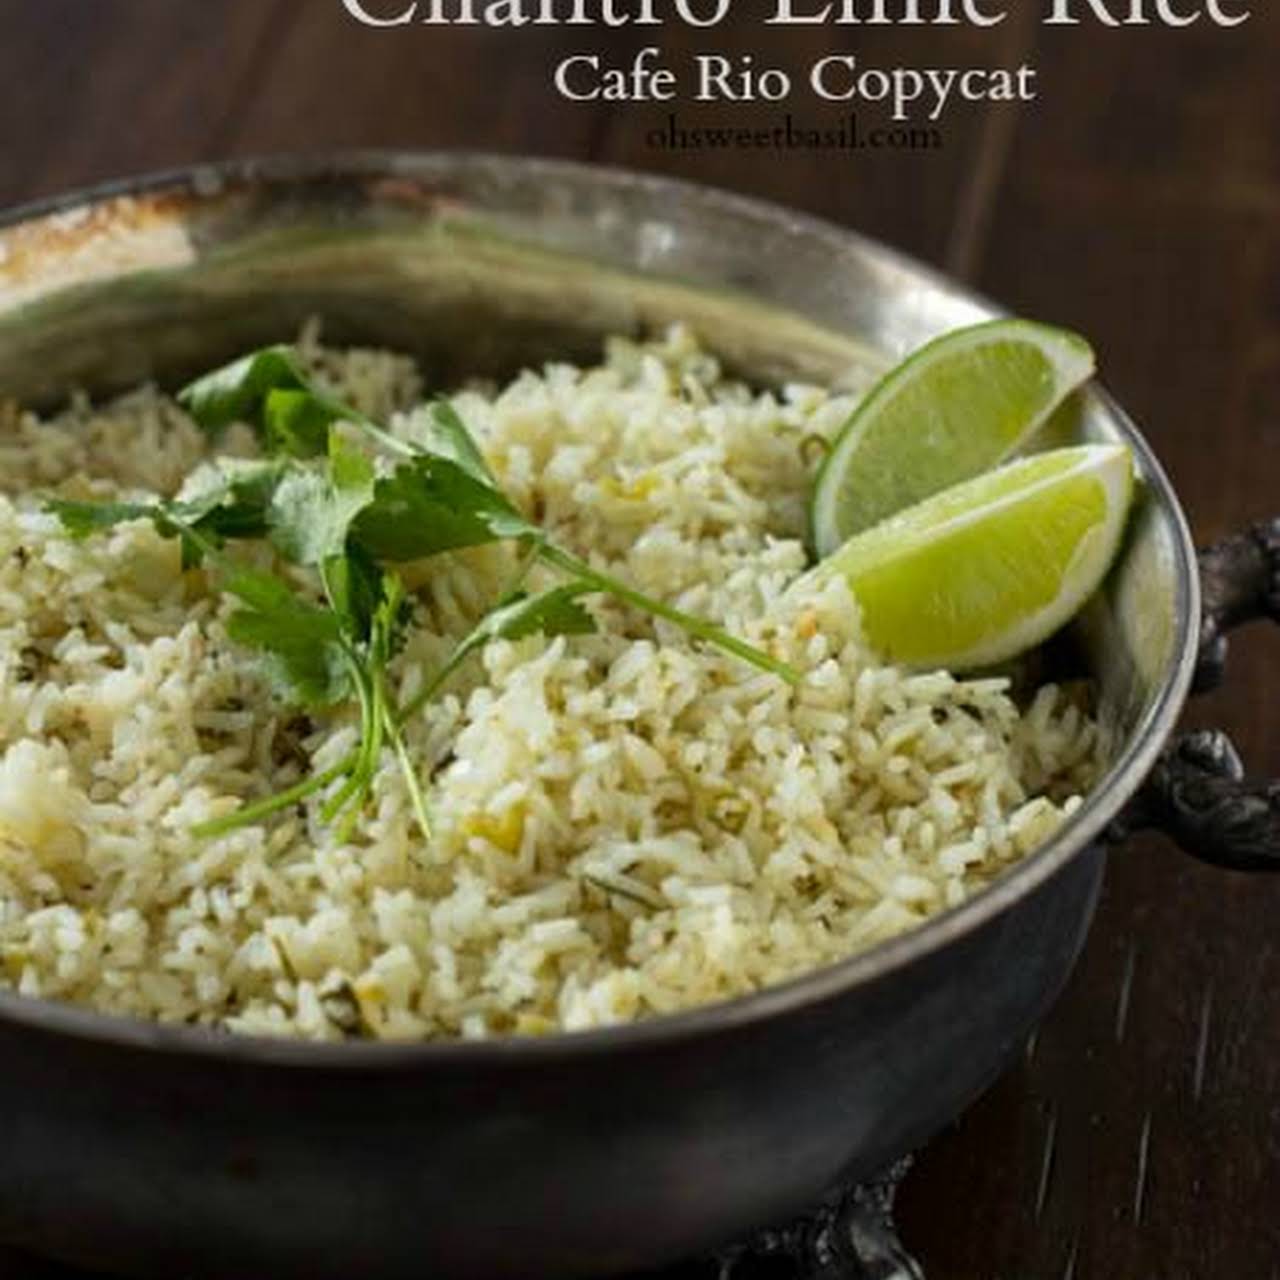 Cilantro Lime Rice-Cafe Rio Copycat